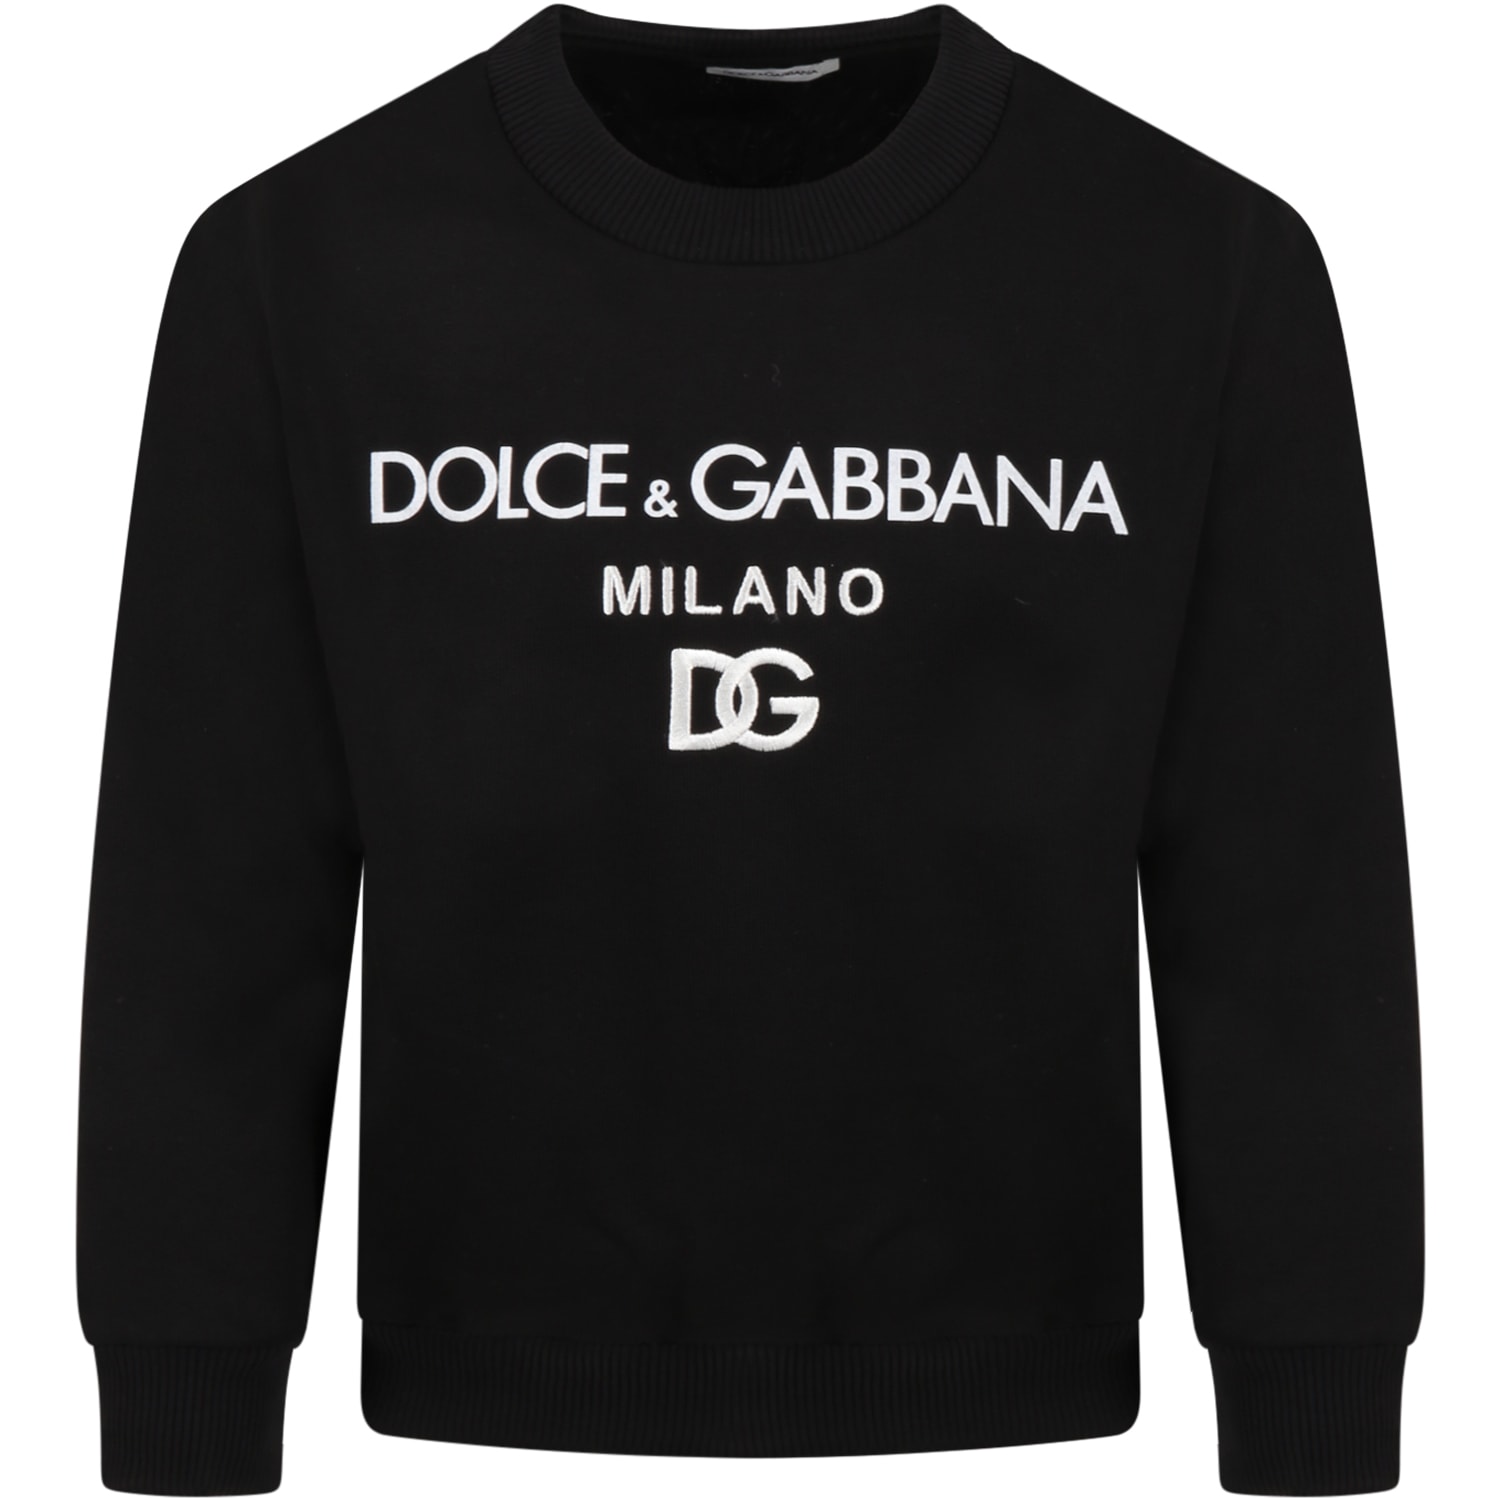 Dolce & Gabbana Black Sweatshirt For Kids With Logos